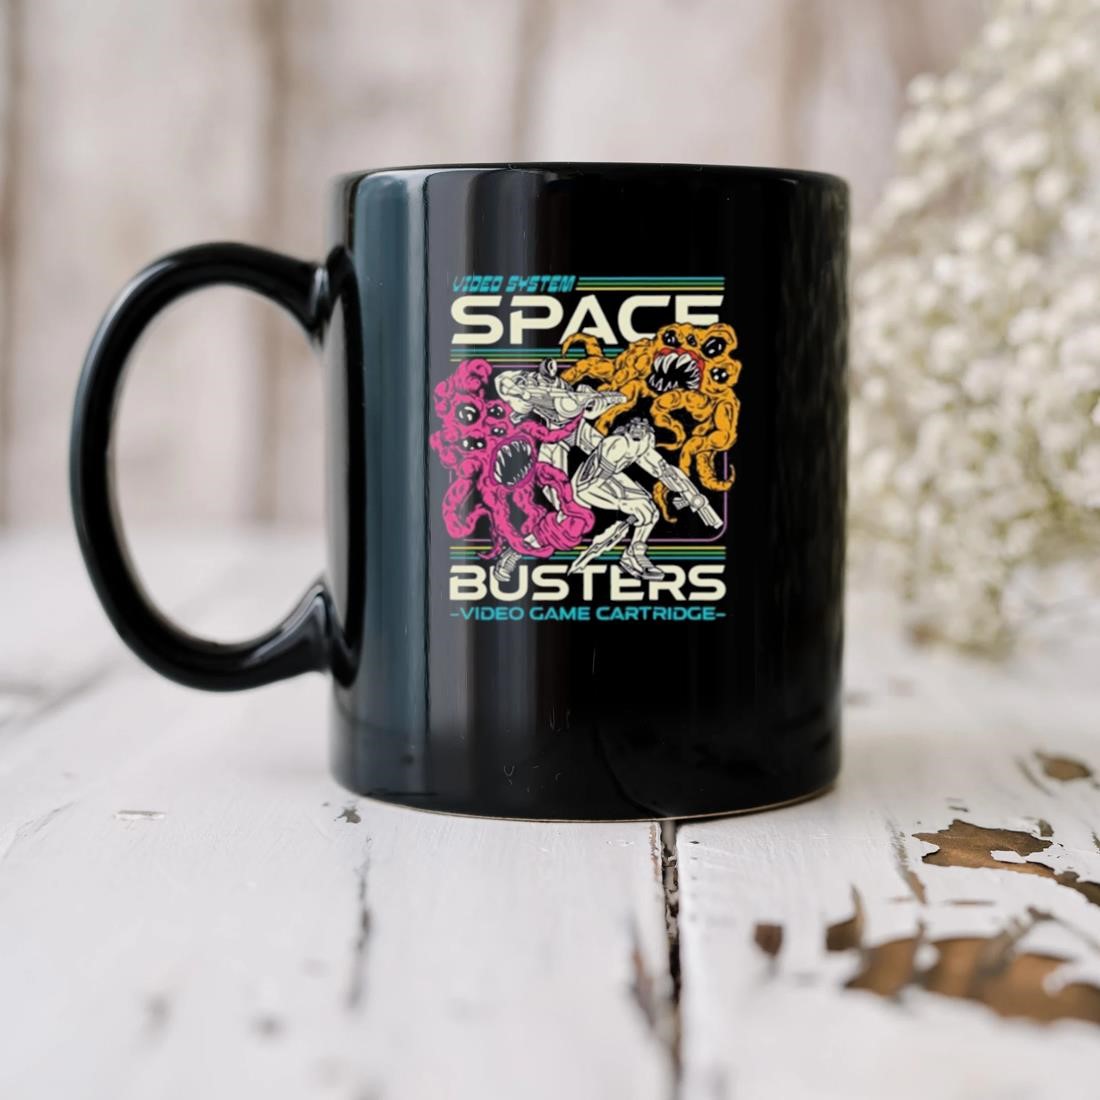 Space Hunters Vs Aliens Video Game Tribute Active Mug biu.jpg